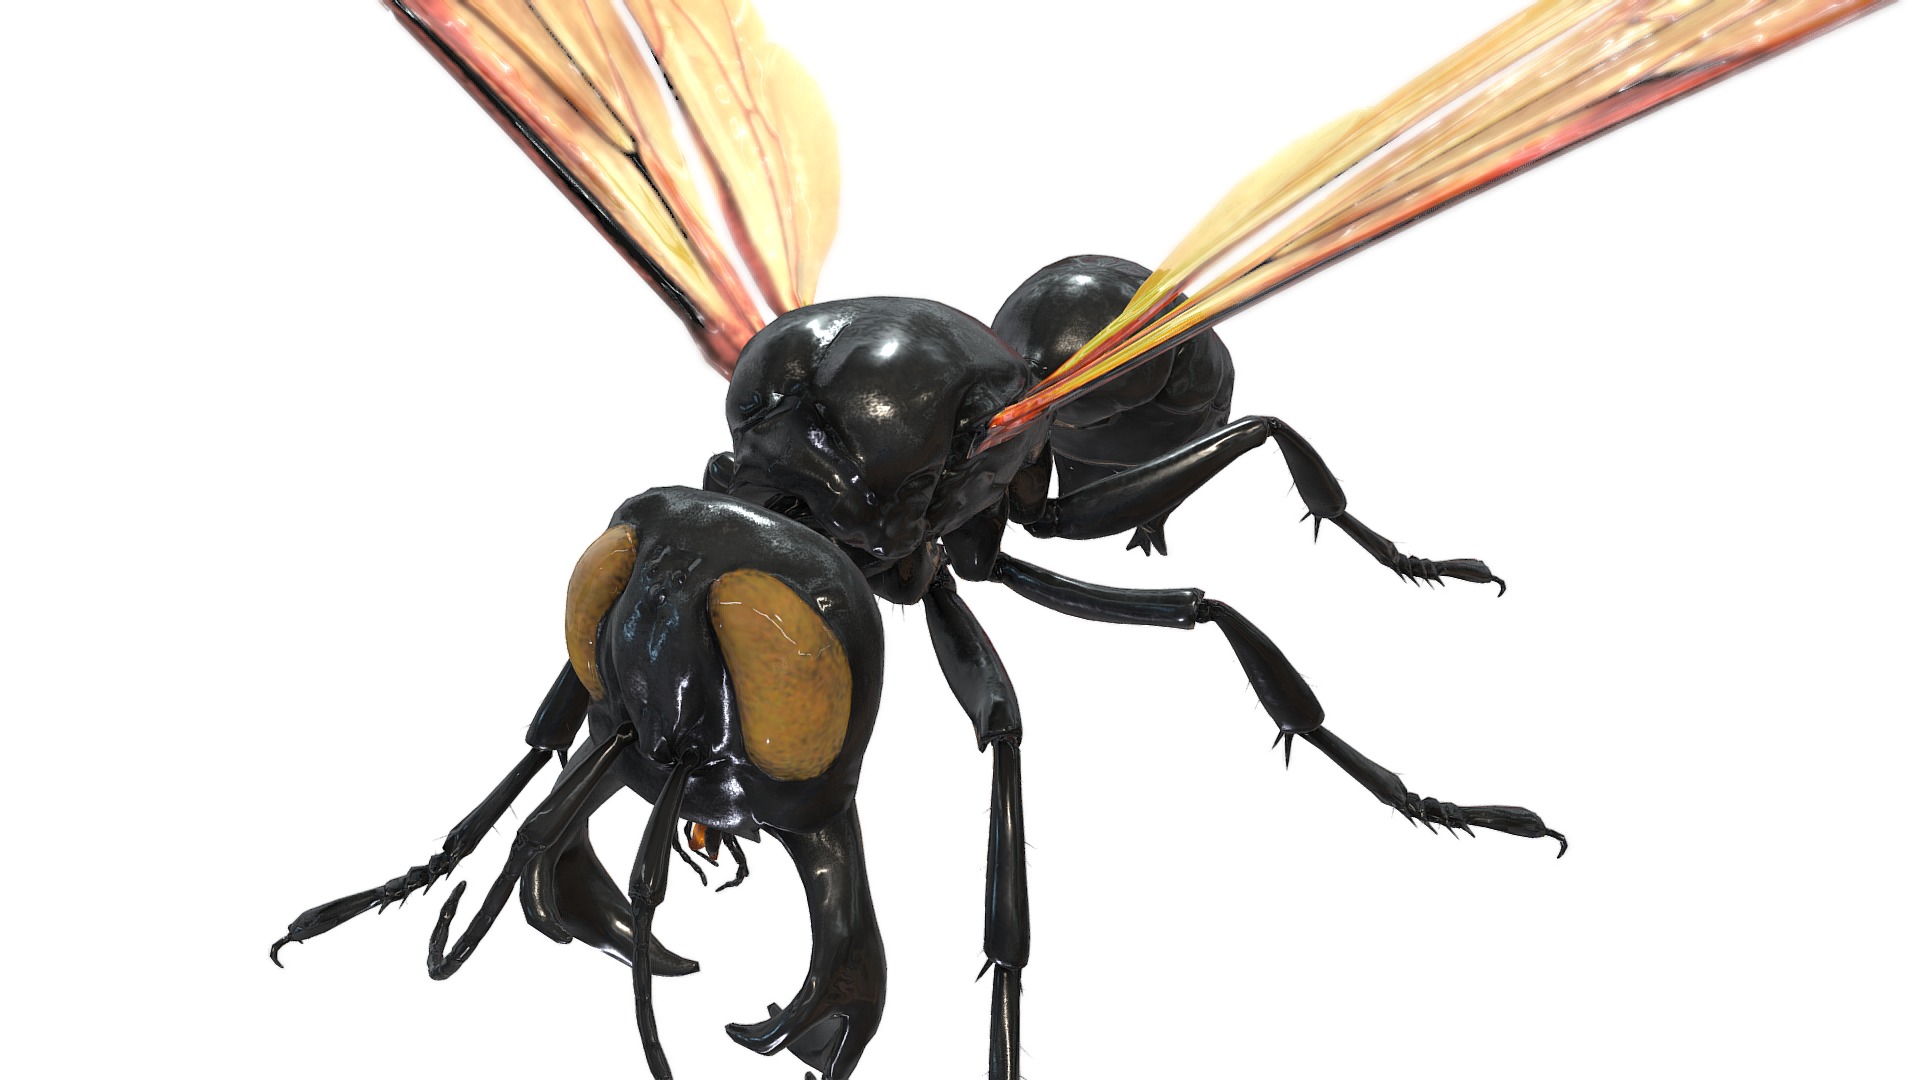 3D model Megalara garuda - This is a 3D model of the Megalara garuda. The 3D model is about a black and yellow insect.